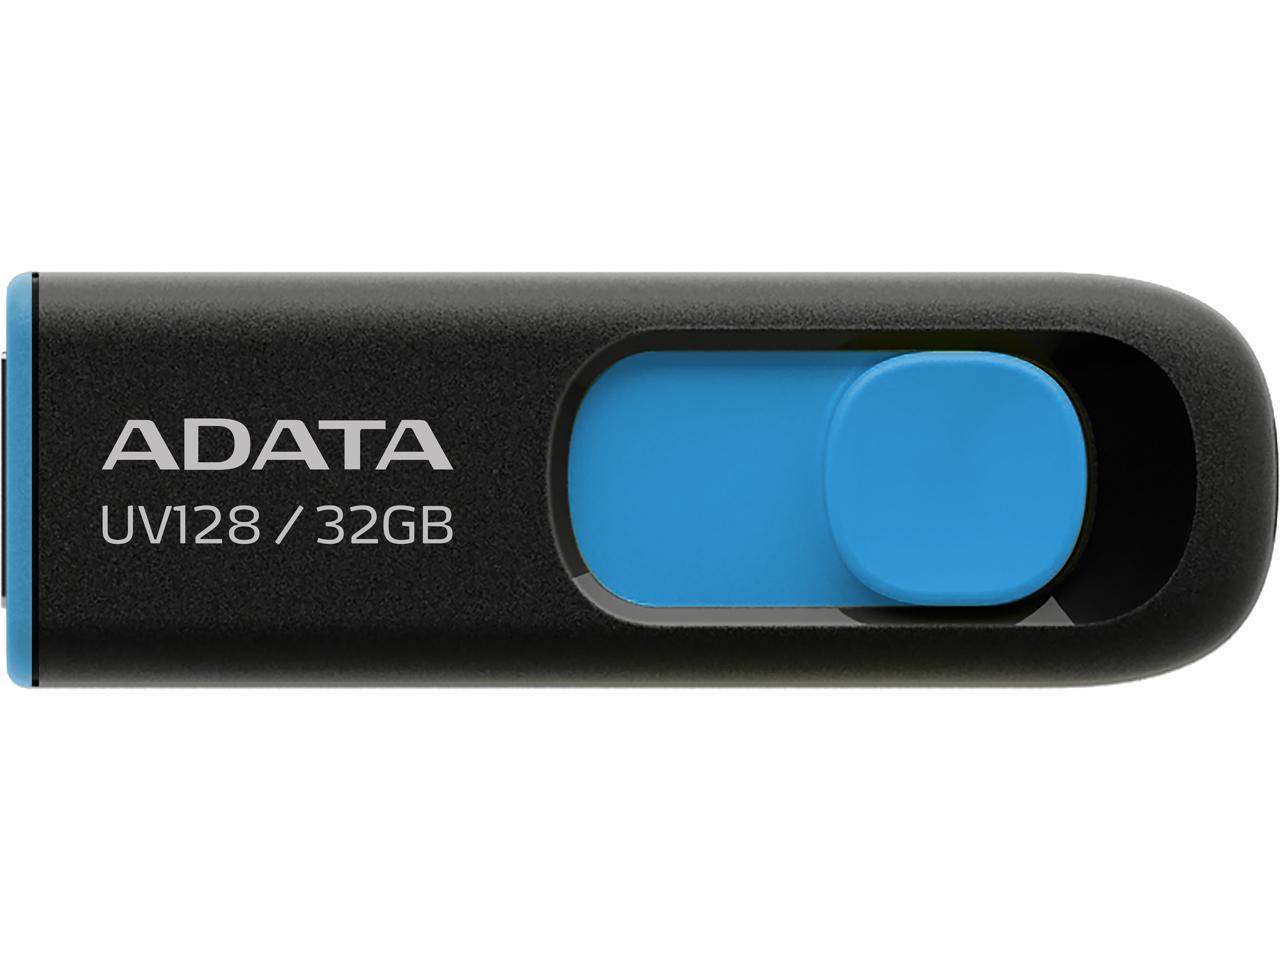 H&R Block Deluxe + State 2021 Tax Software + ADATA 32GB USB 3.2 Gen 1 Flash Drive for $25.98 w/ FS